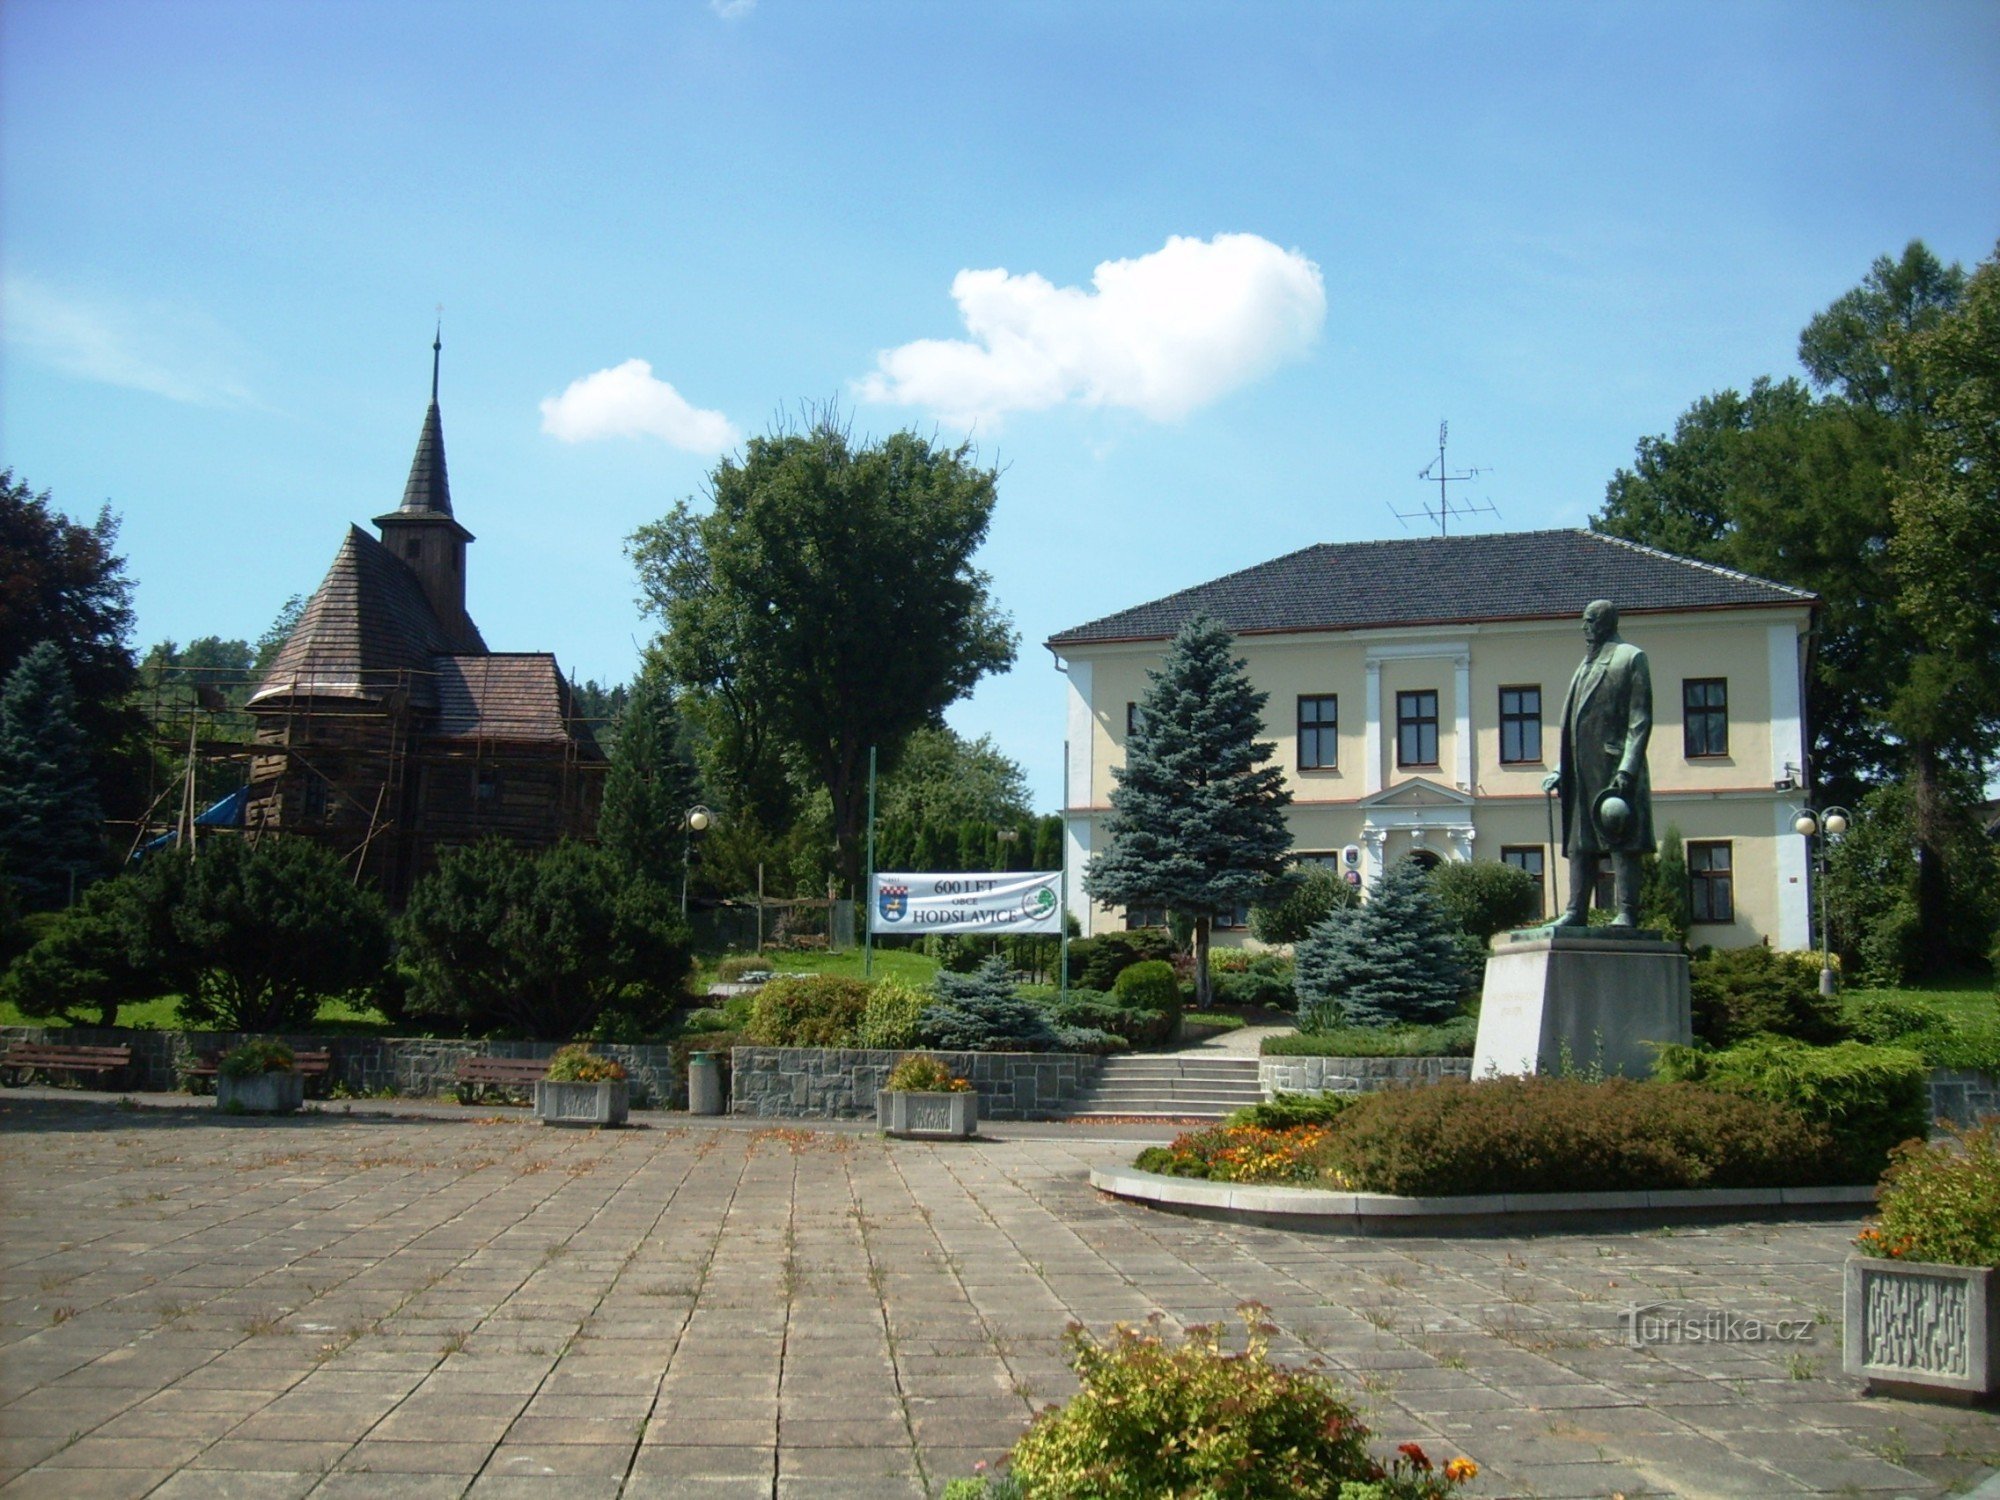 centrum av byn Hodslavice